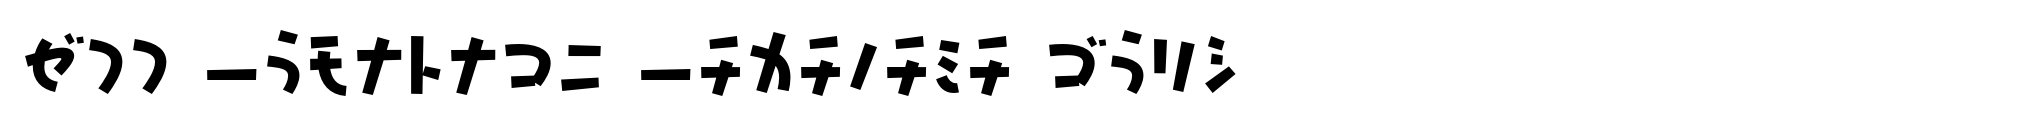 P22 Komusubi Katakana Bold image